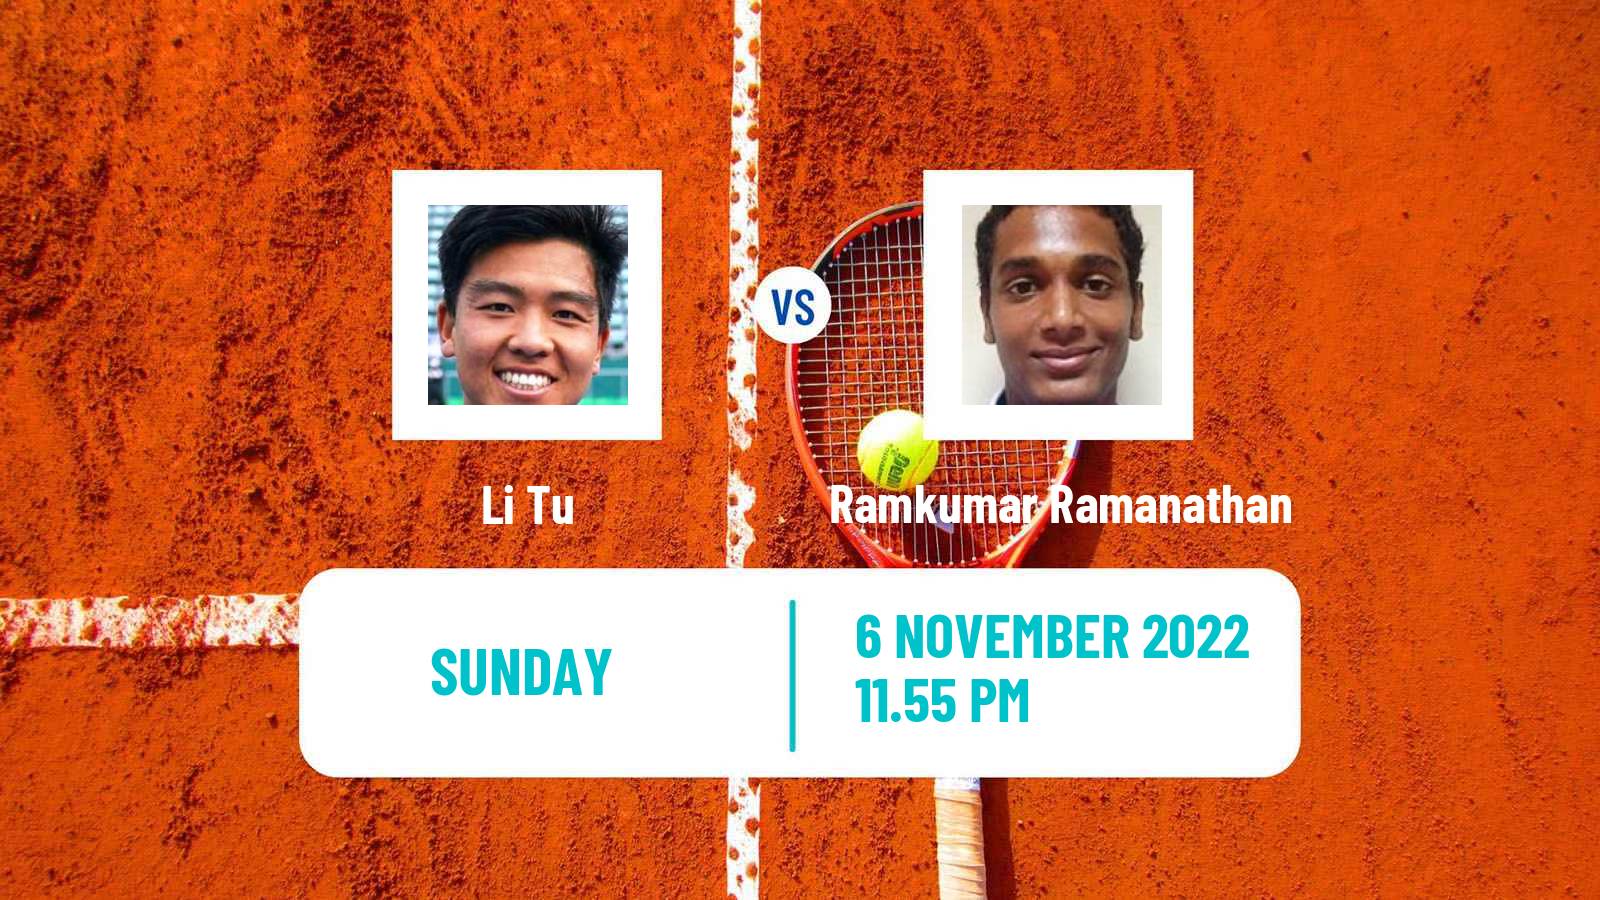 Tennis ATP Challenger Li Tu - Ramkumar Ramanathan